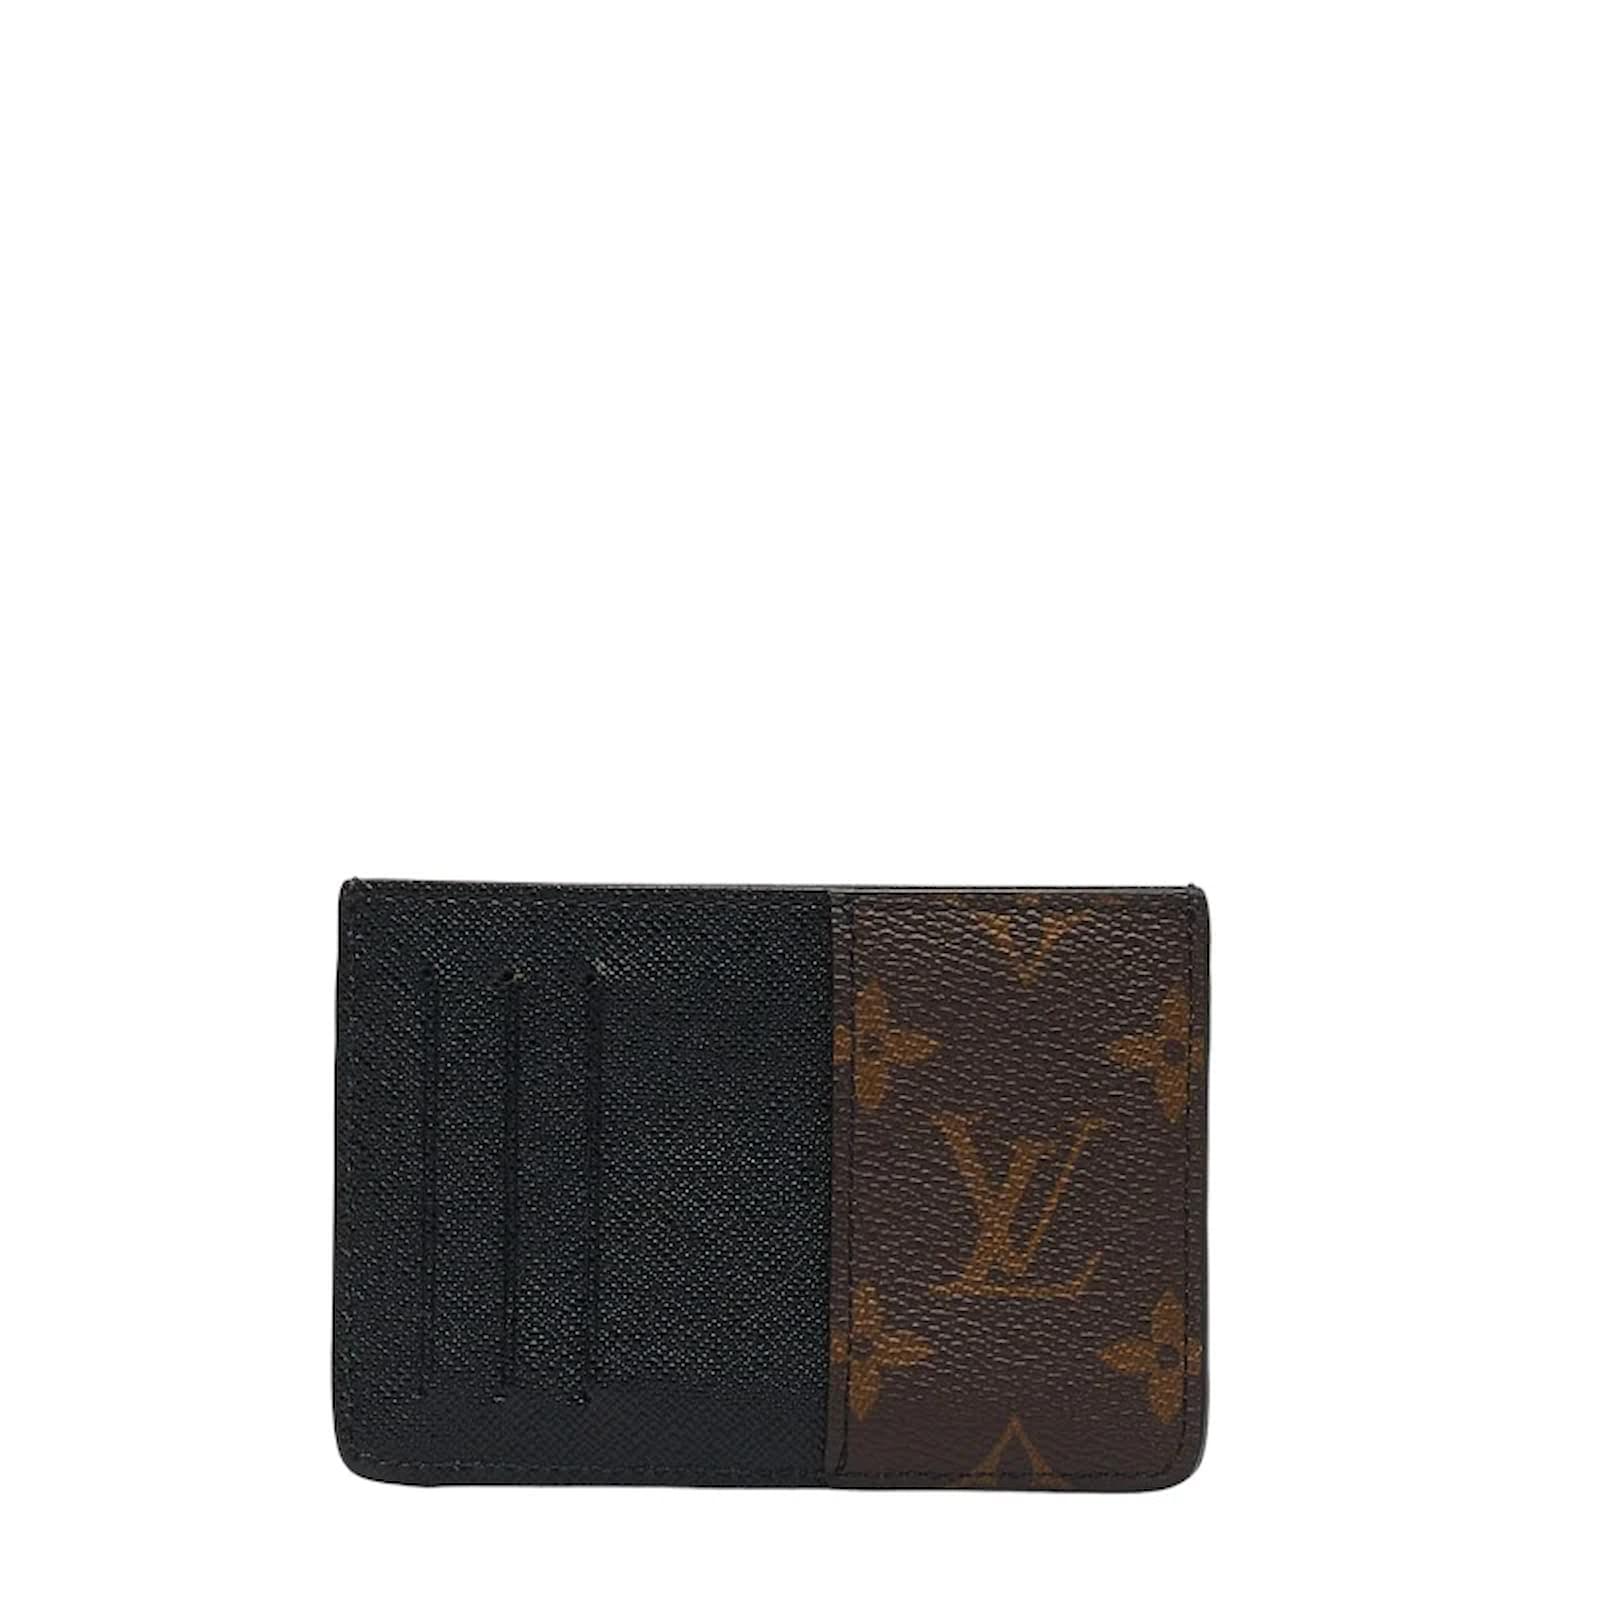 Louis Vuitton Louis Vuitton NEO CARD HOLDER Monogram Macassar in Brown -  Small Leather Goods M60166 - $39.00 